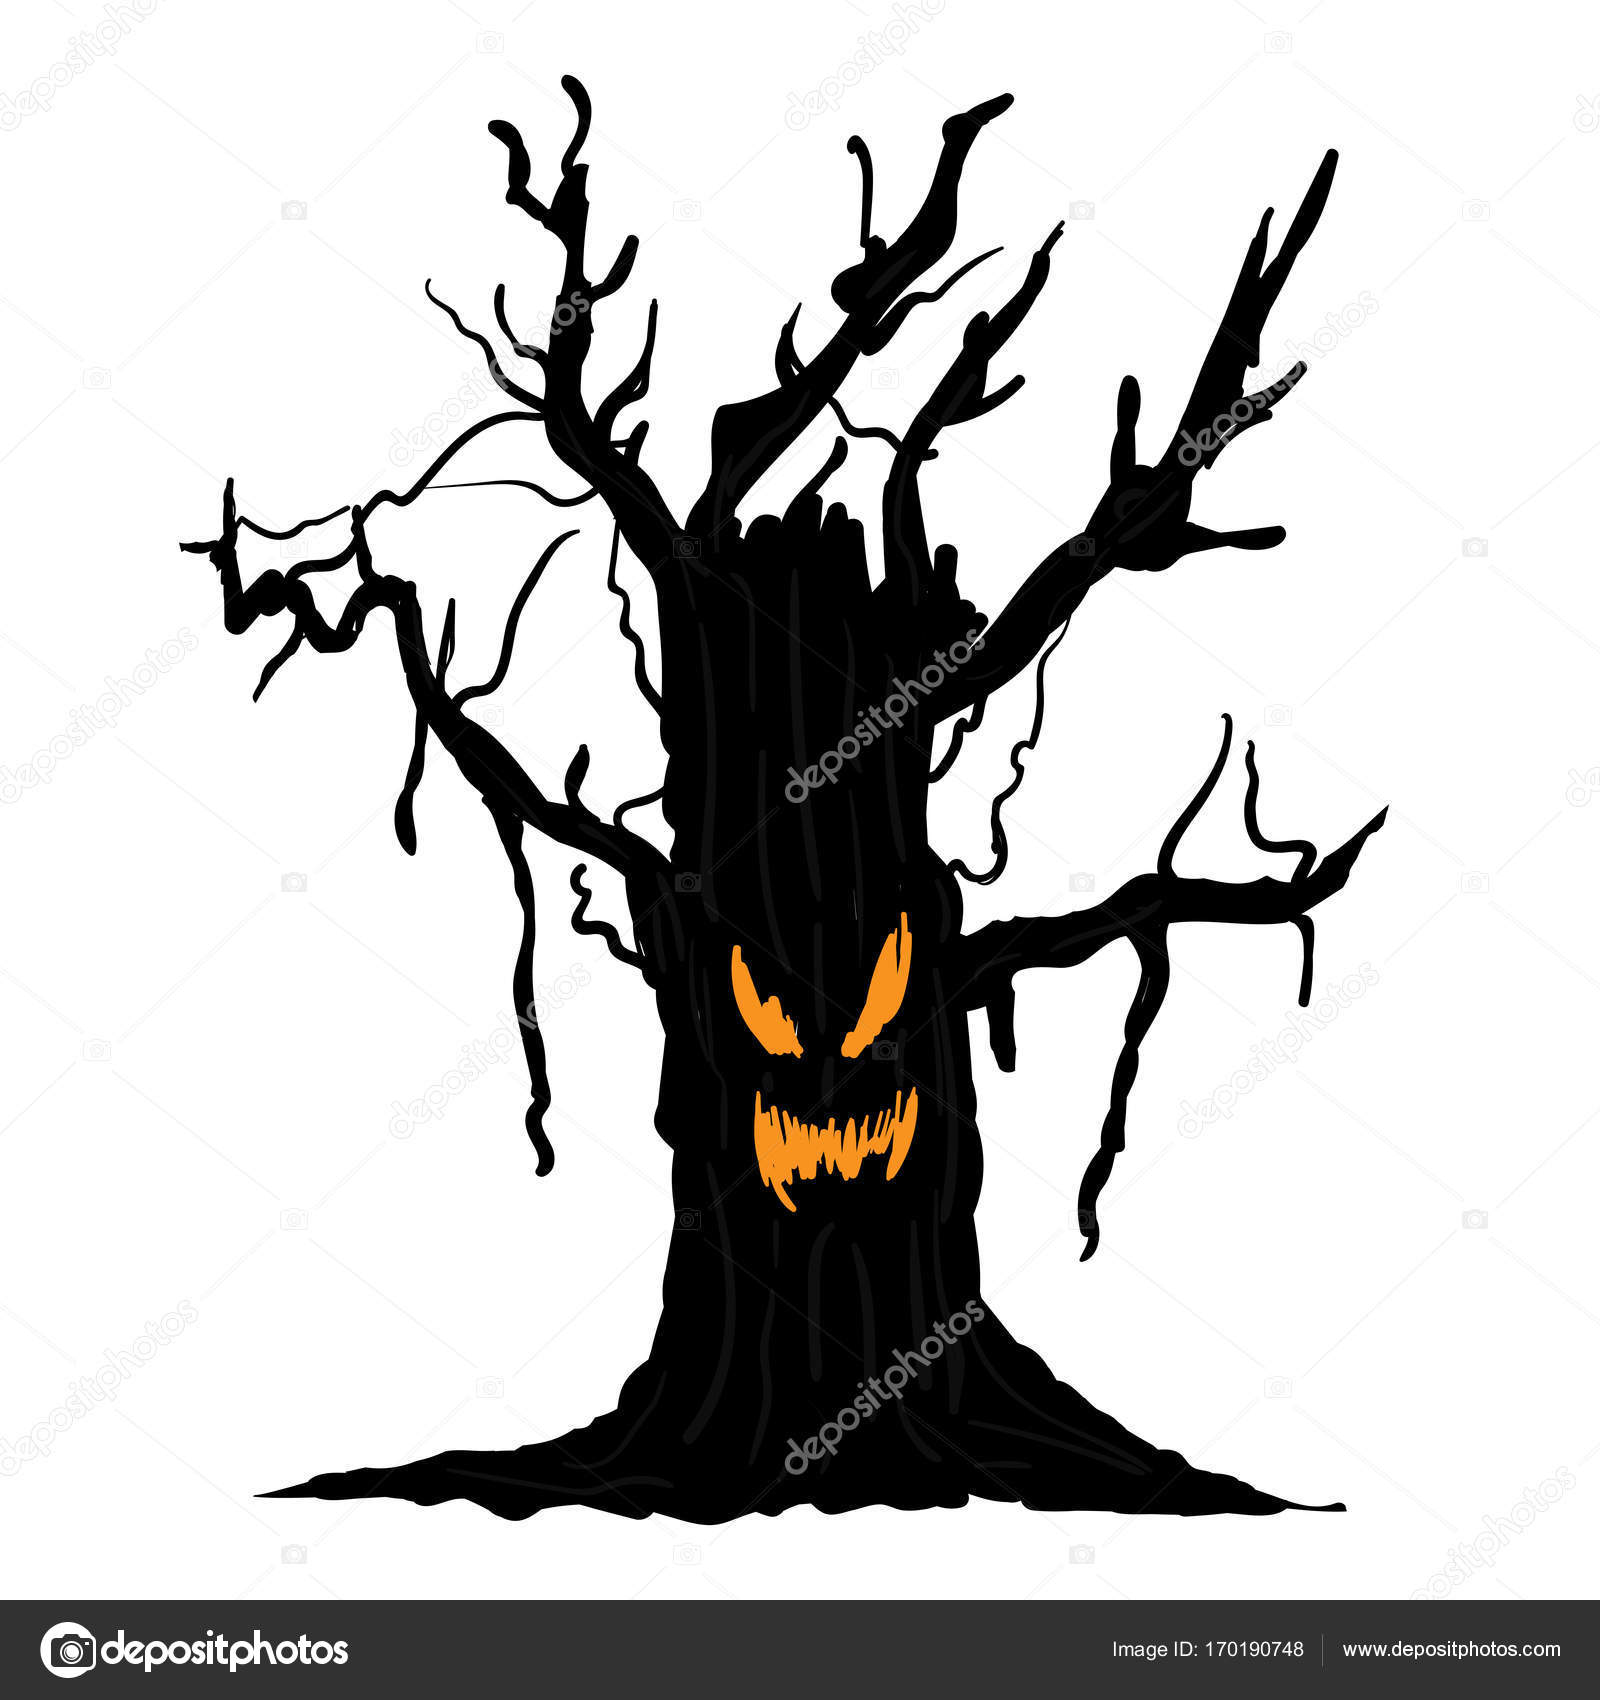 Download Vector: arbol halloween | vector de árbol de Halloween ...